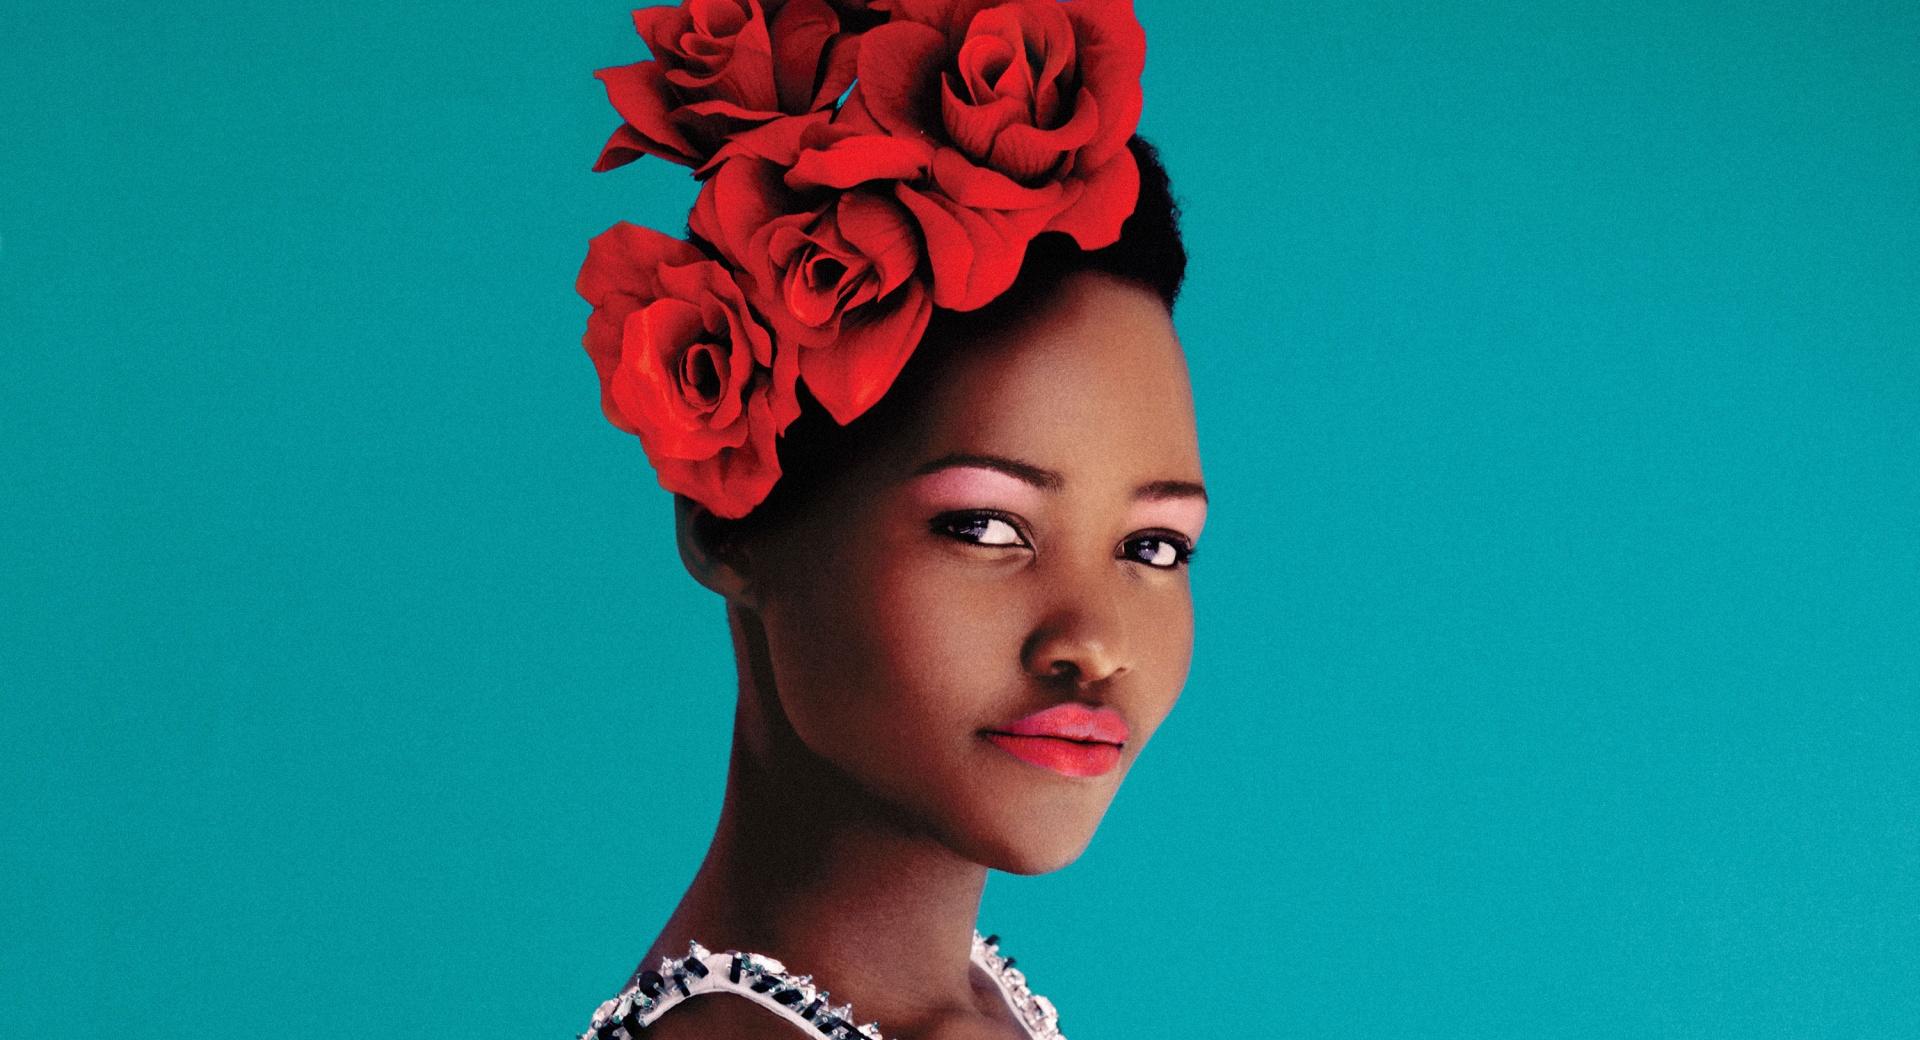 Lupita Nyongo Portrait at 1600 x 1200 size wallpapers HD quality